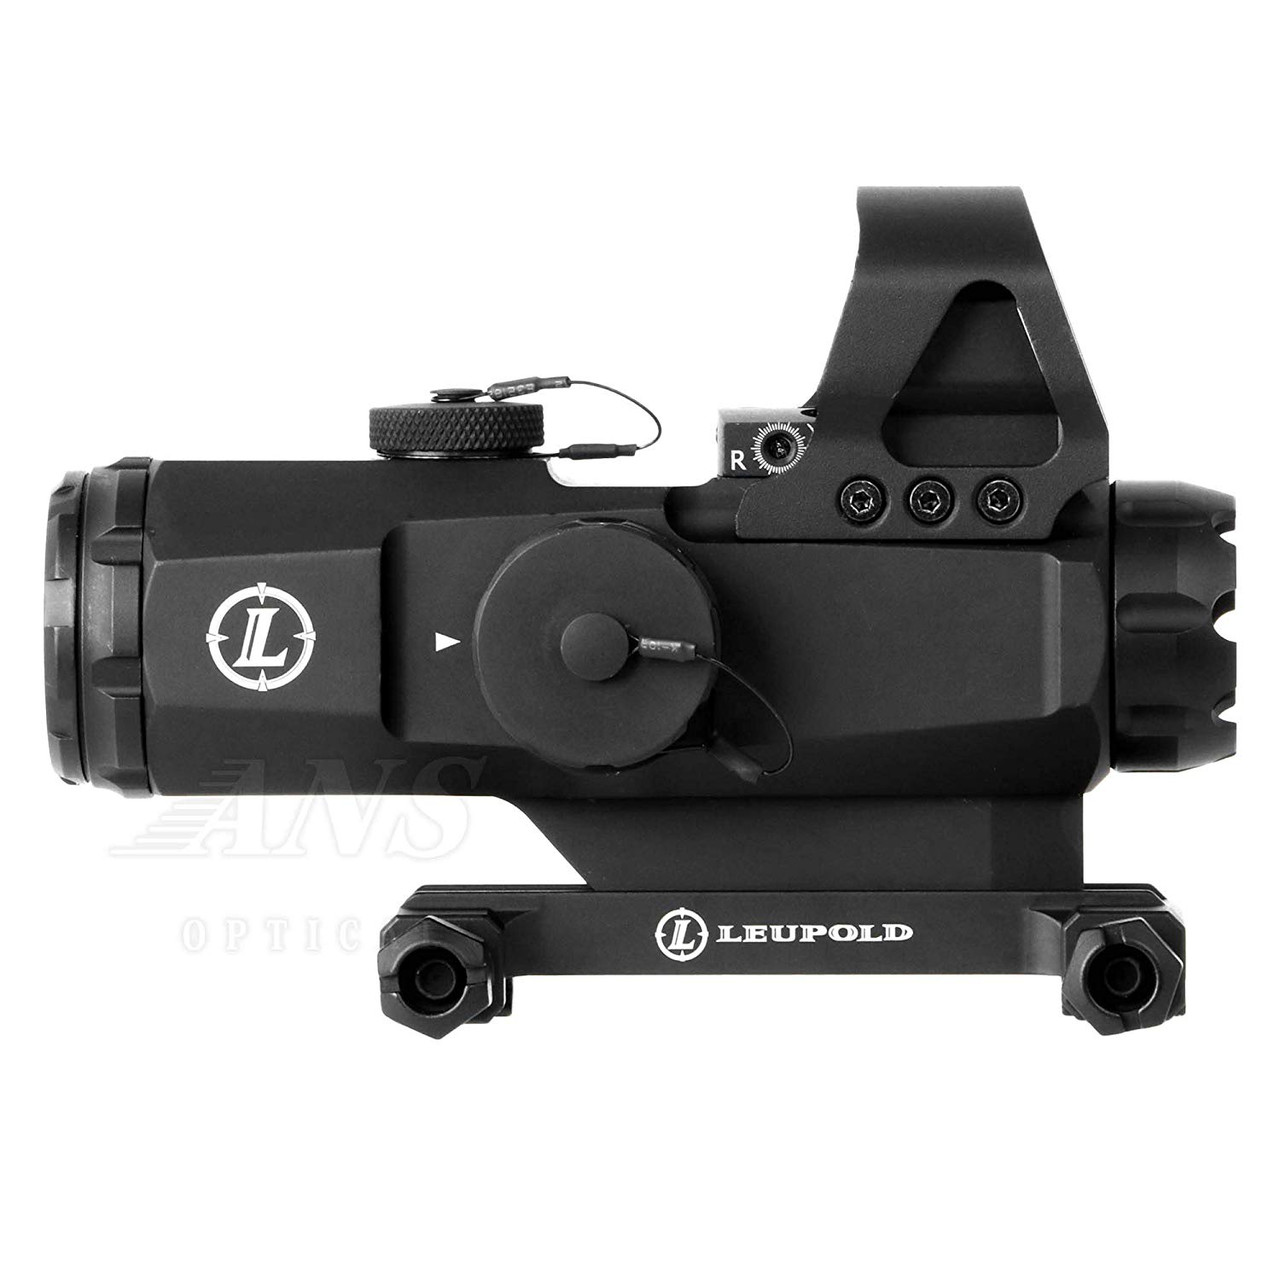 Leupold Mark 4 HAMR type 4x scope with delta point type dot sight